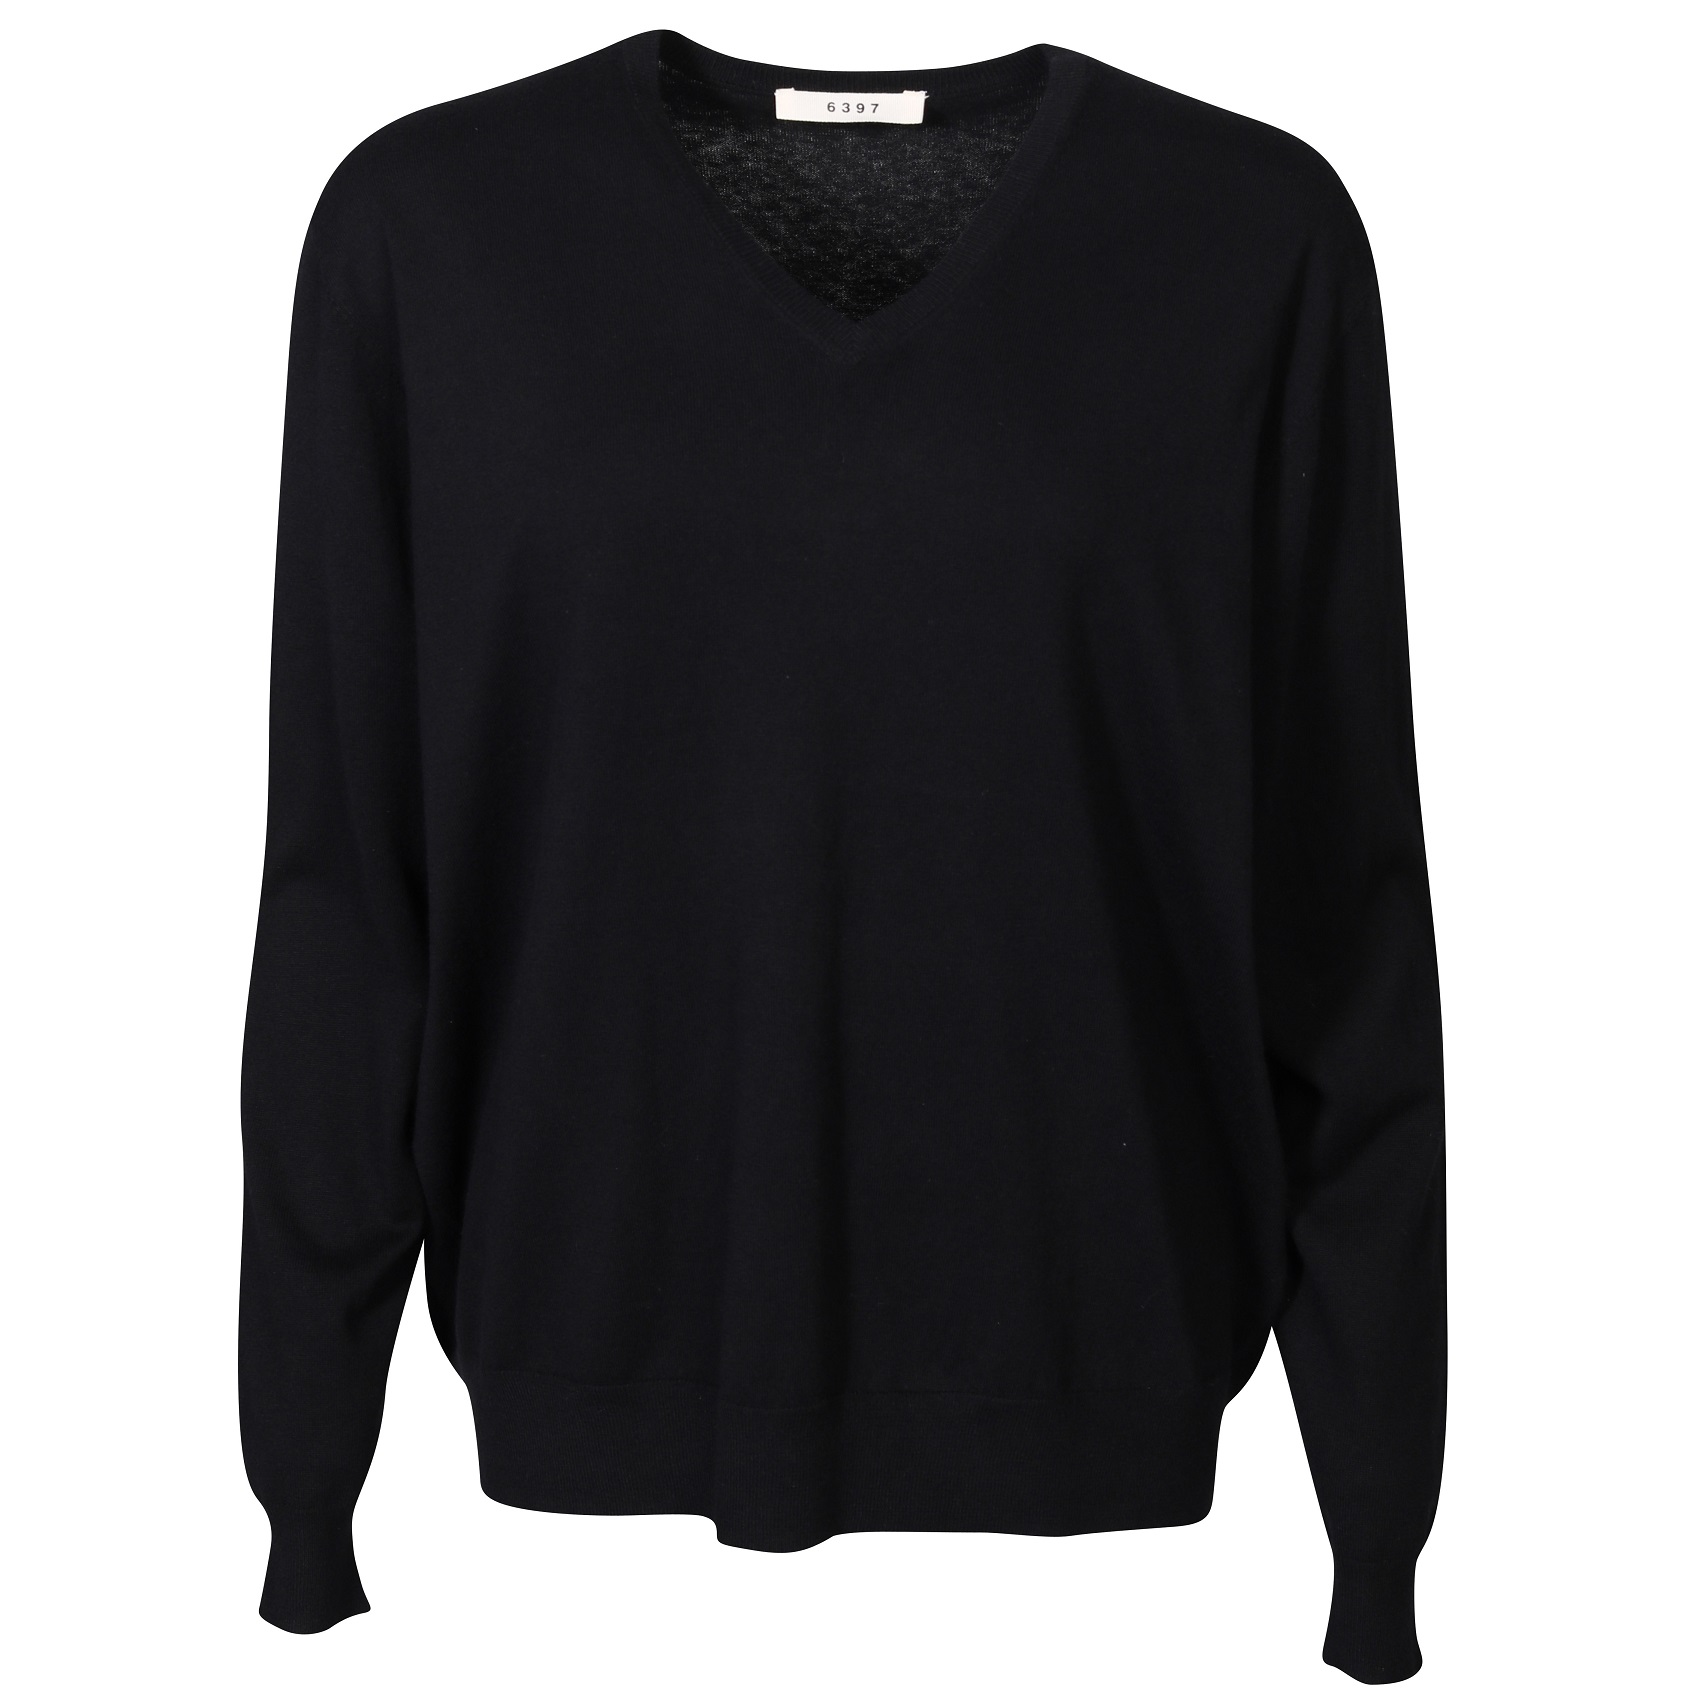 6397 Classic V-Neck Cotton Knit Pullover in Black S